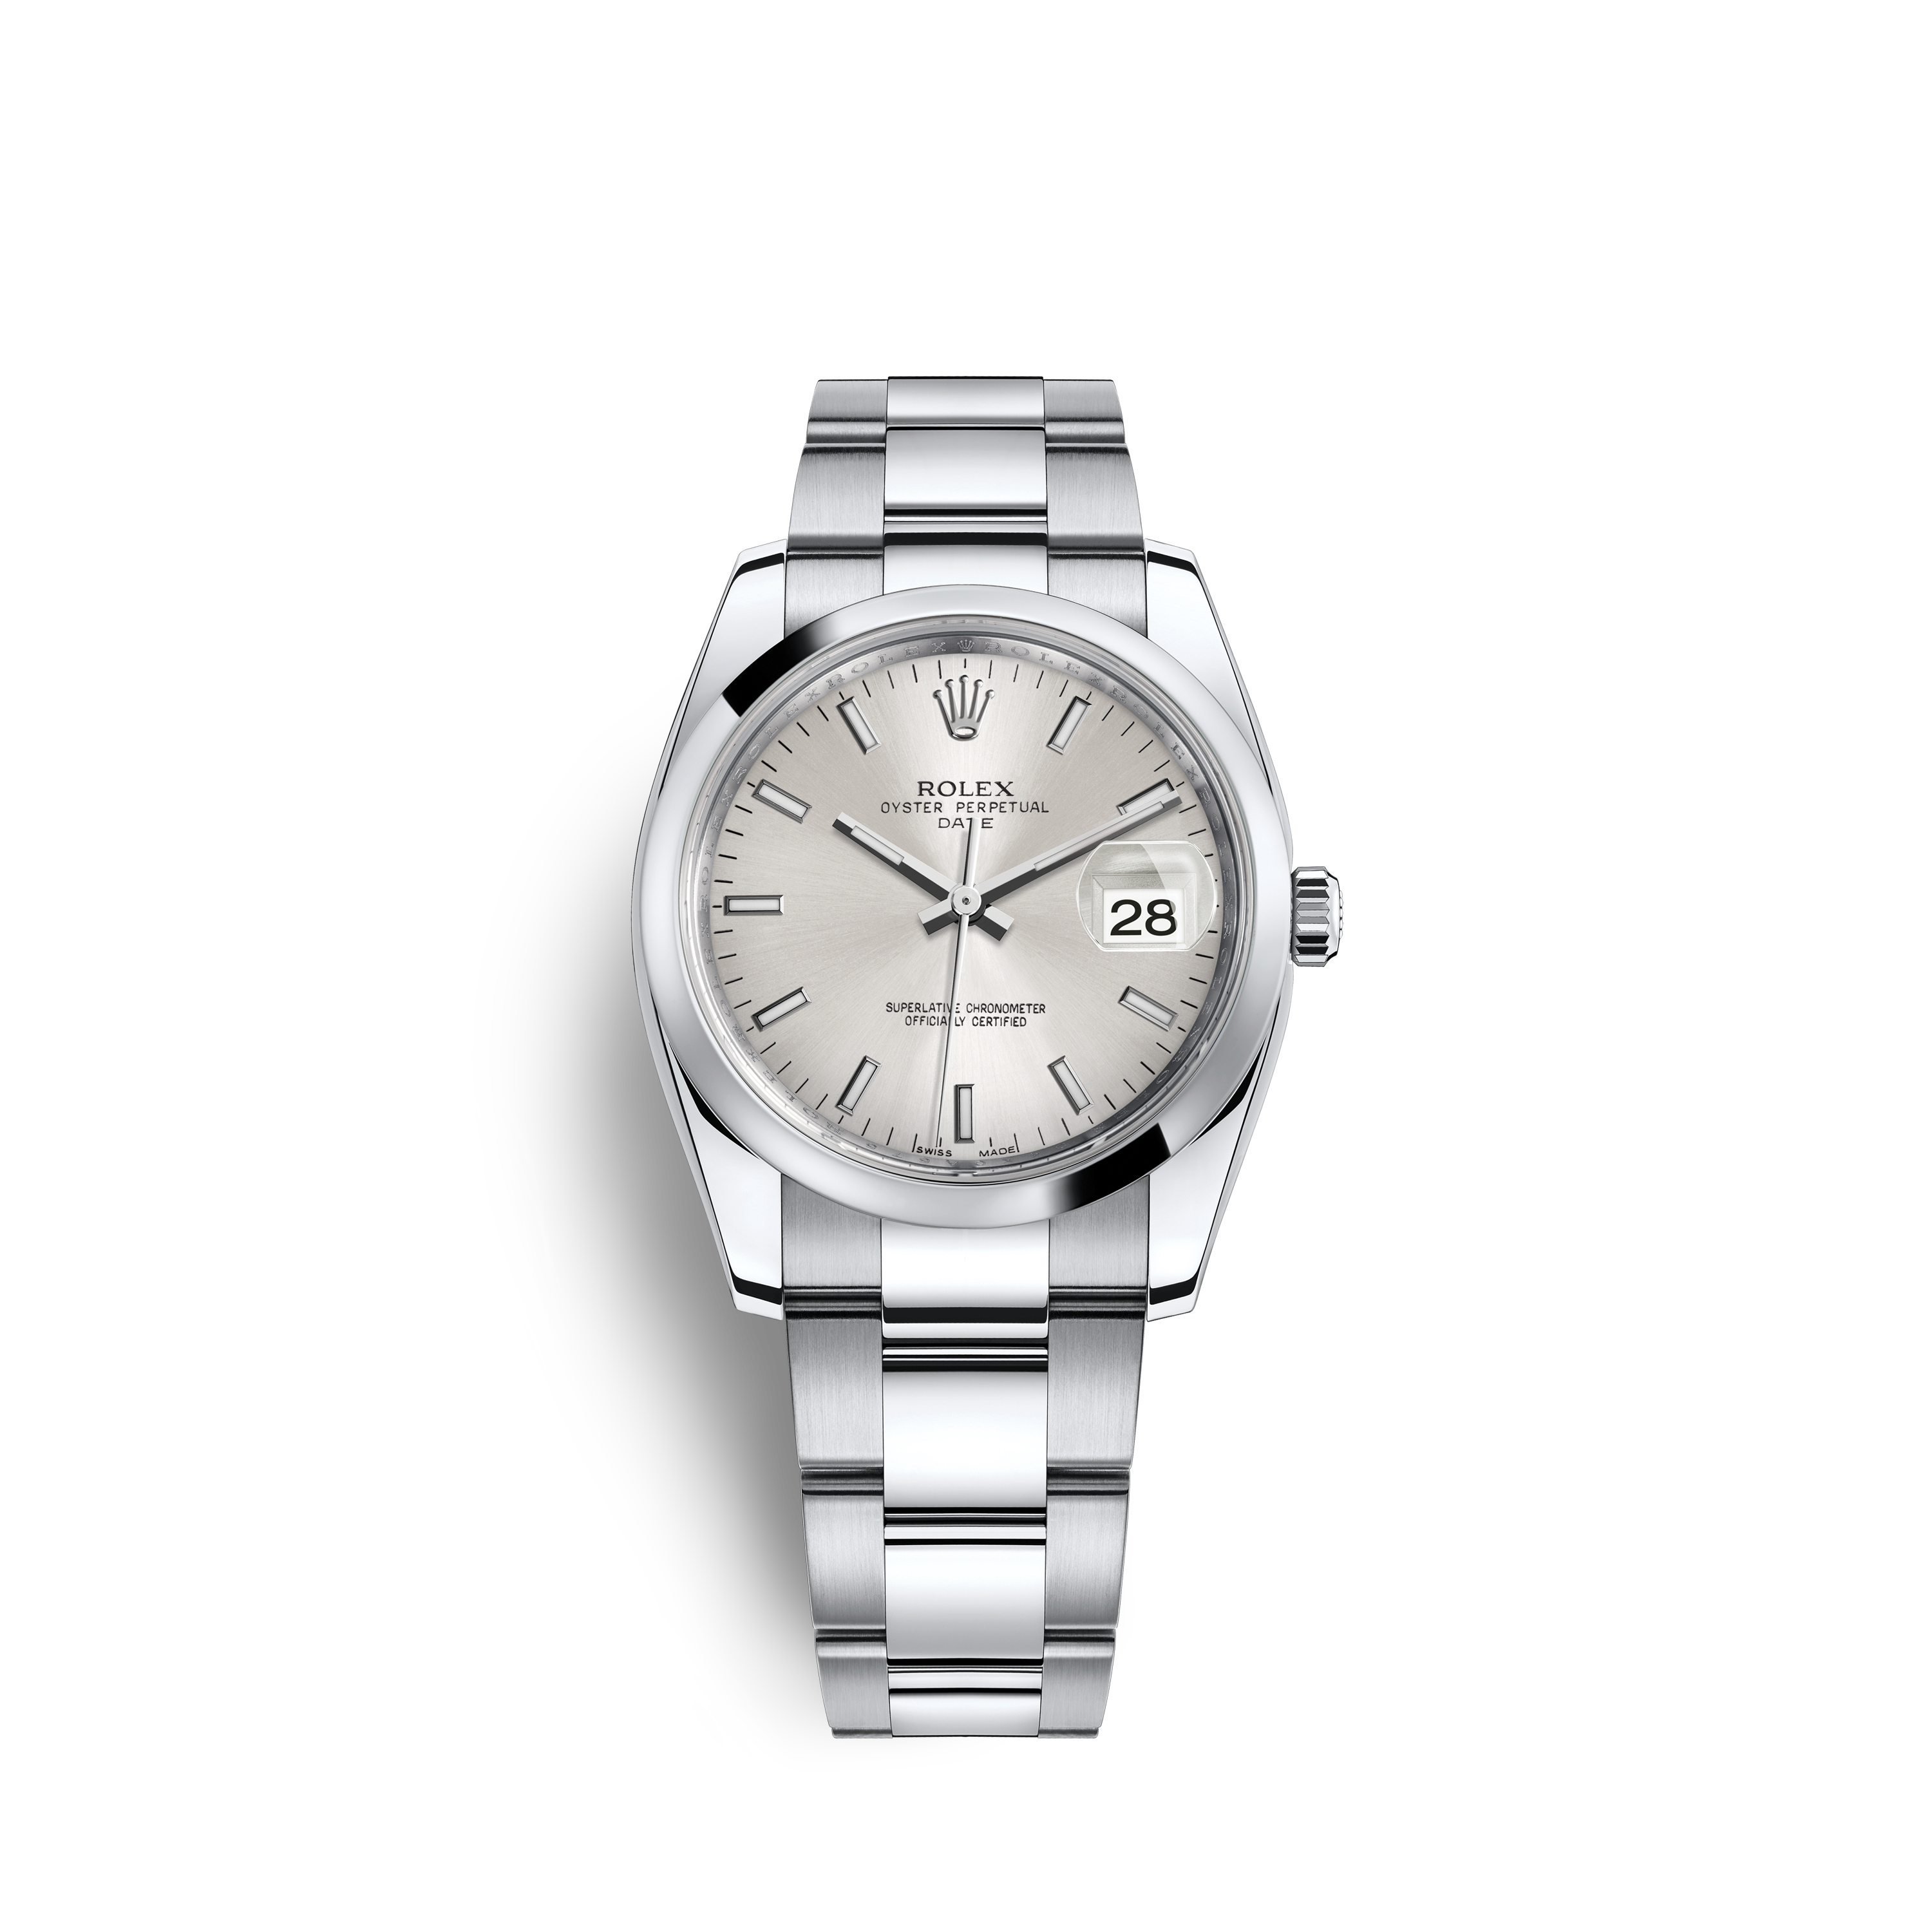 Tiffany Replikas Watches